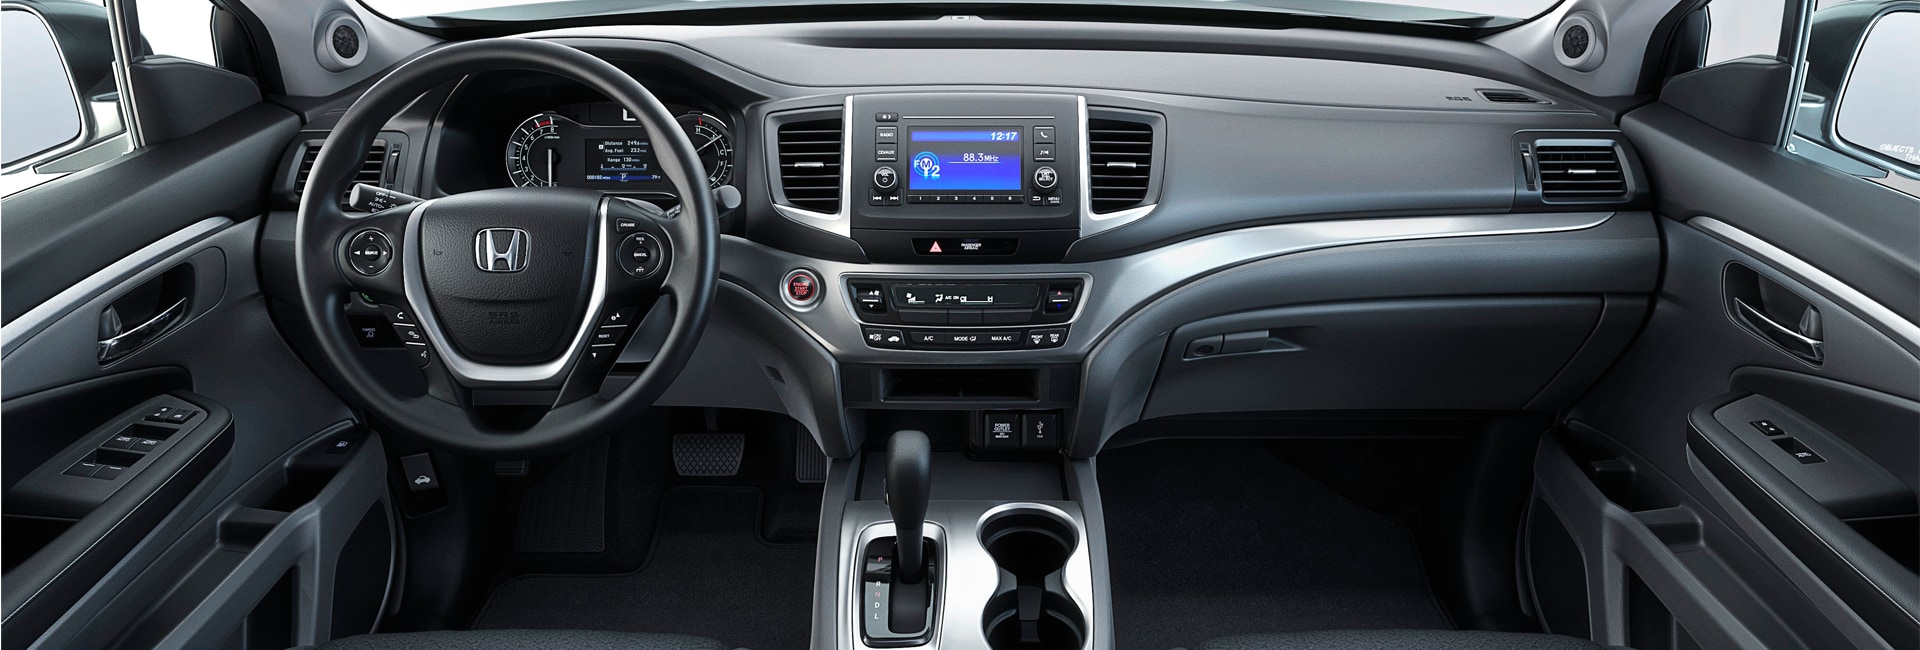 Honda Ridgeline Interior Vehicle Features